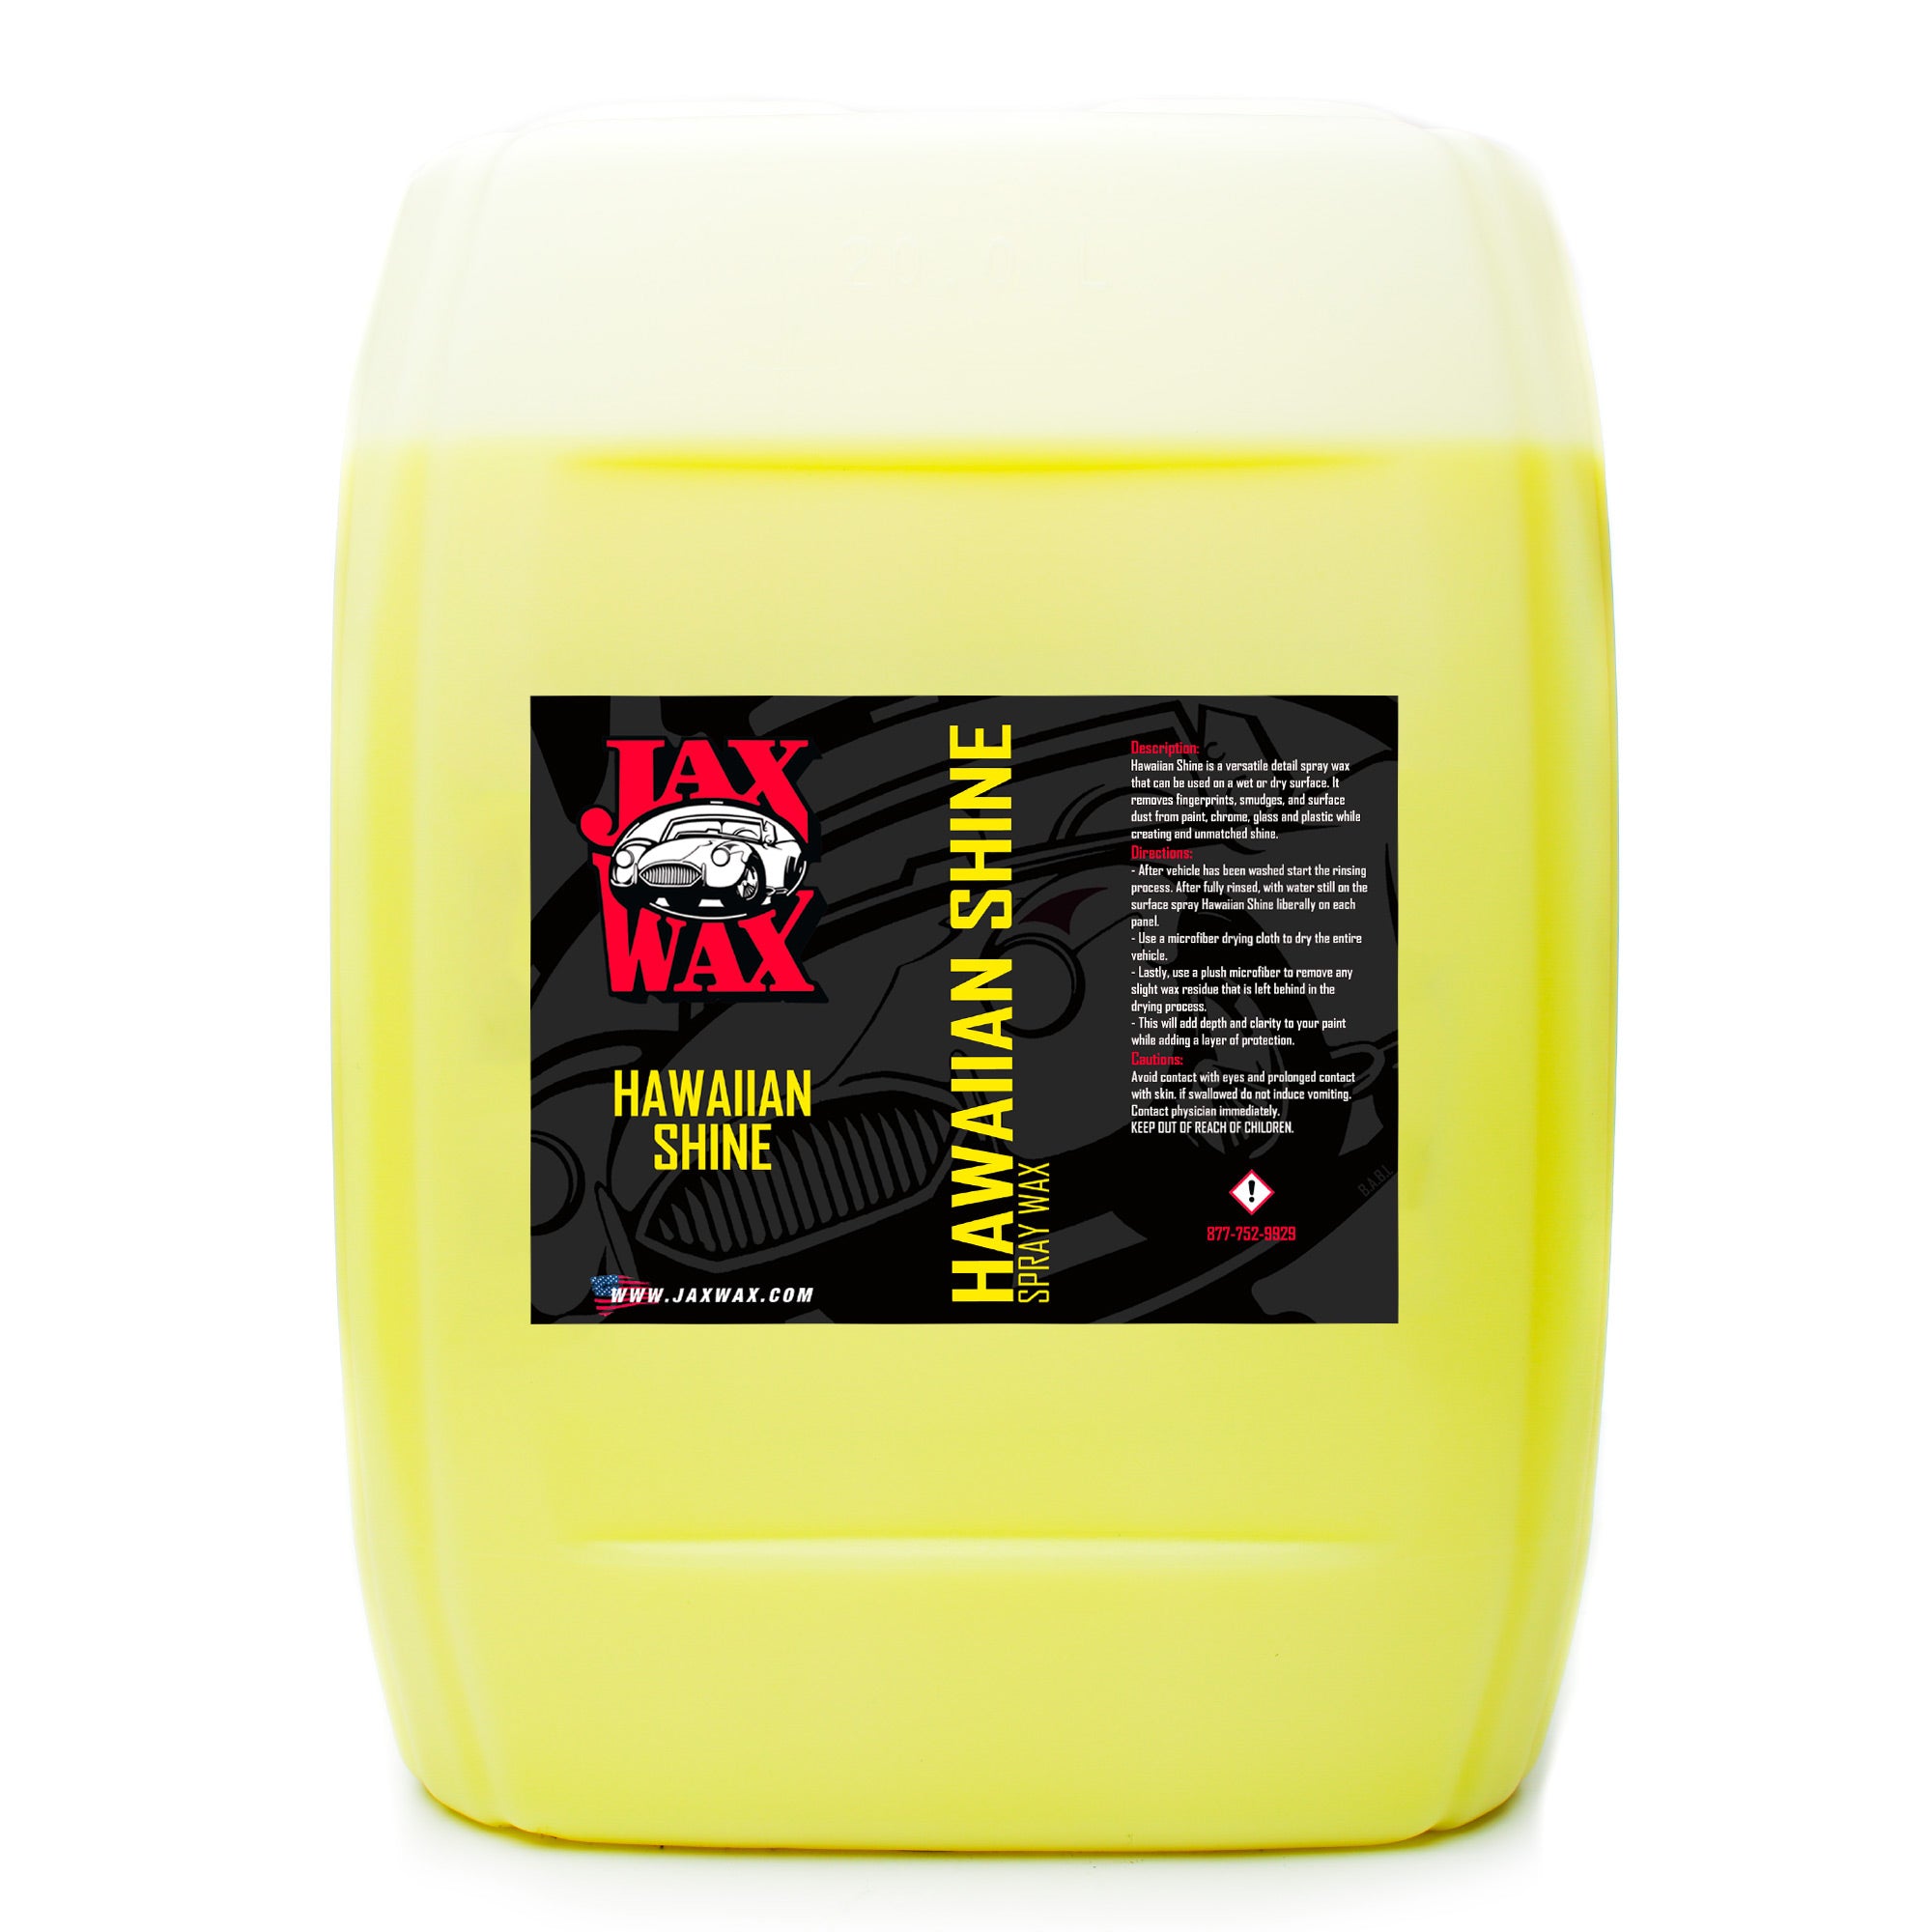 Jax Wax Hawaiian Shine Carnauba Car Wax, Quick Detail Spray for a Deep  Gloss Finish on Car, Boat, Truck, Motorcycle and More - 32 Ounce